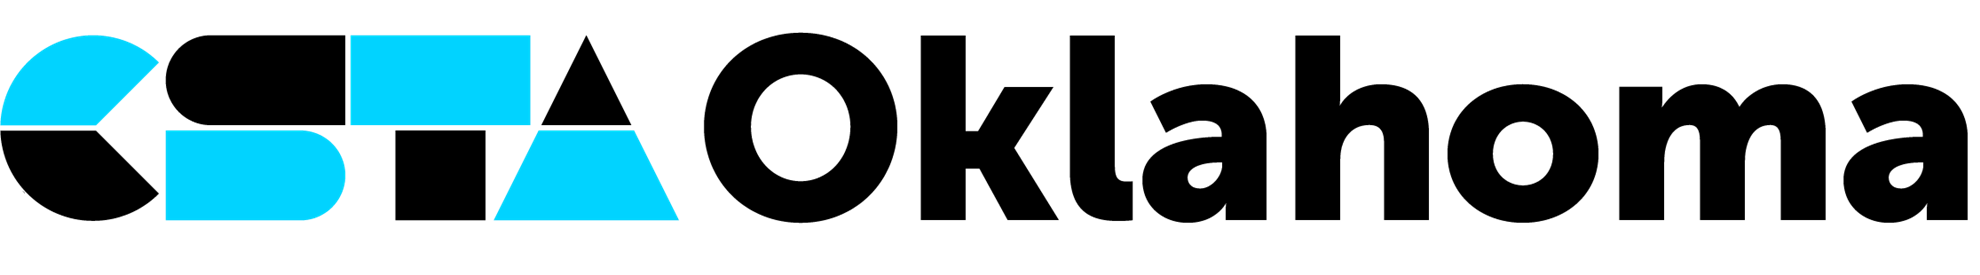 CSTA Oklahoma logo